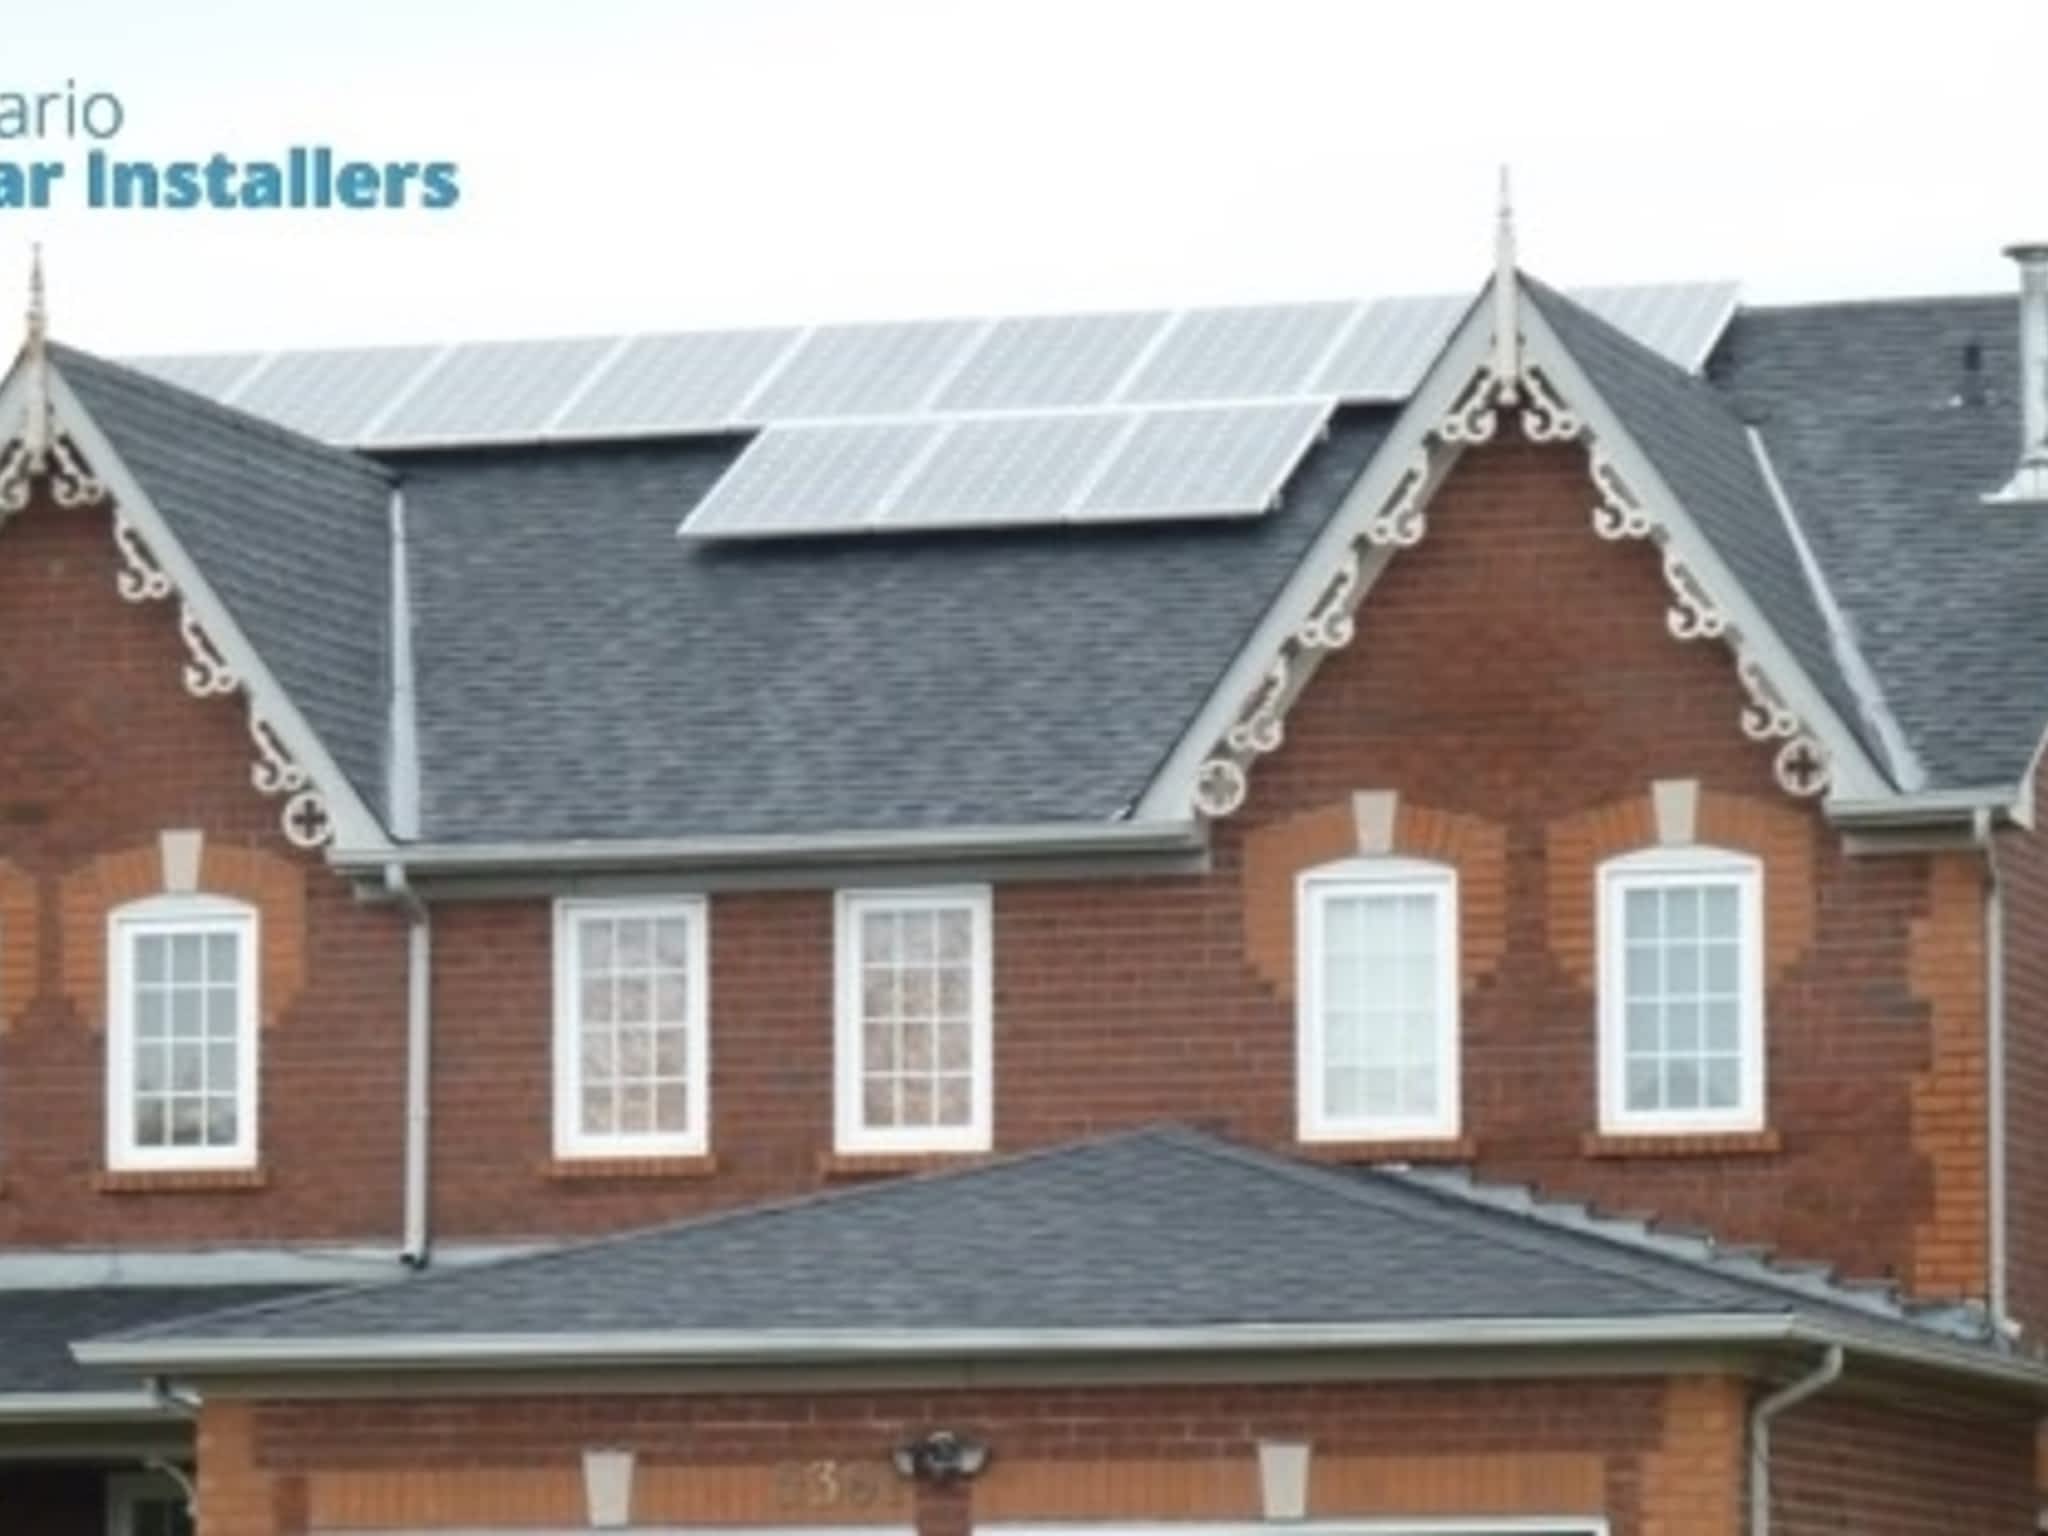 photo Ontario Solar Installers